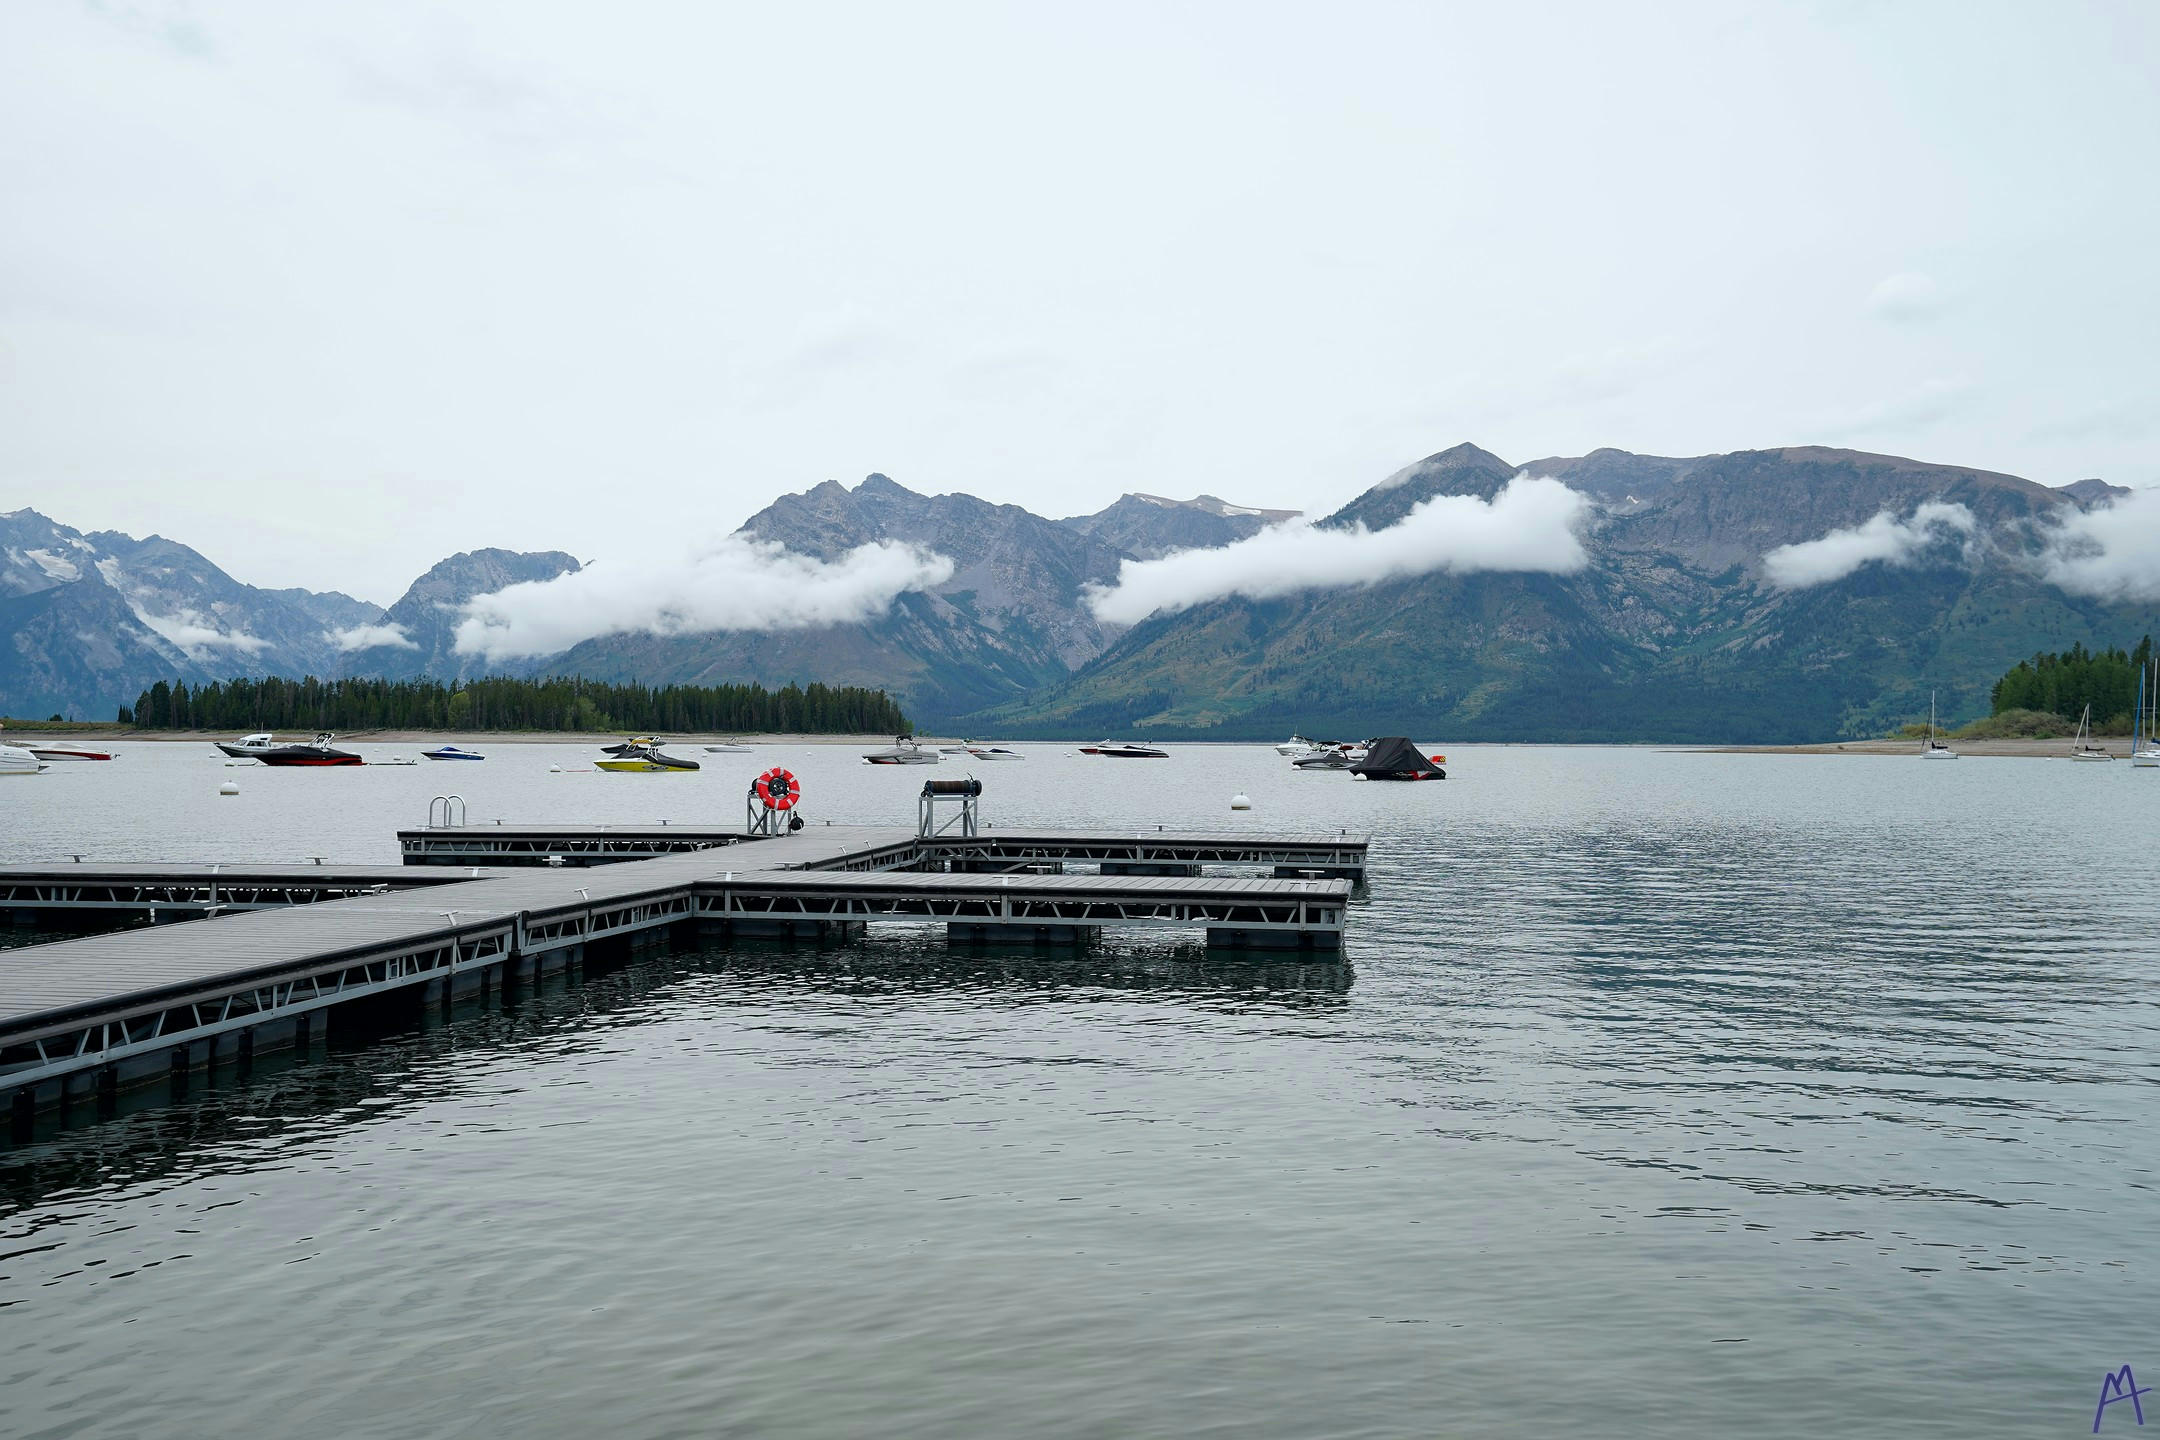 Dock with many boats in lake at Grand Teton